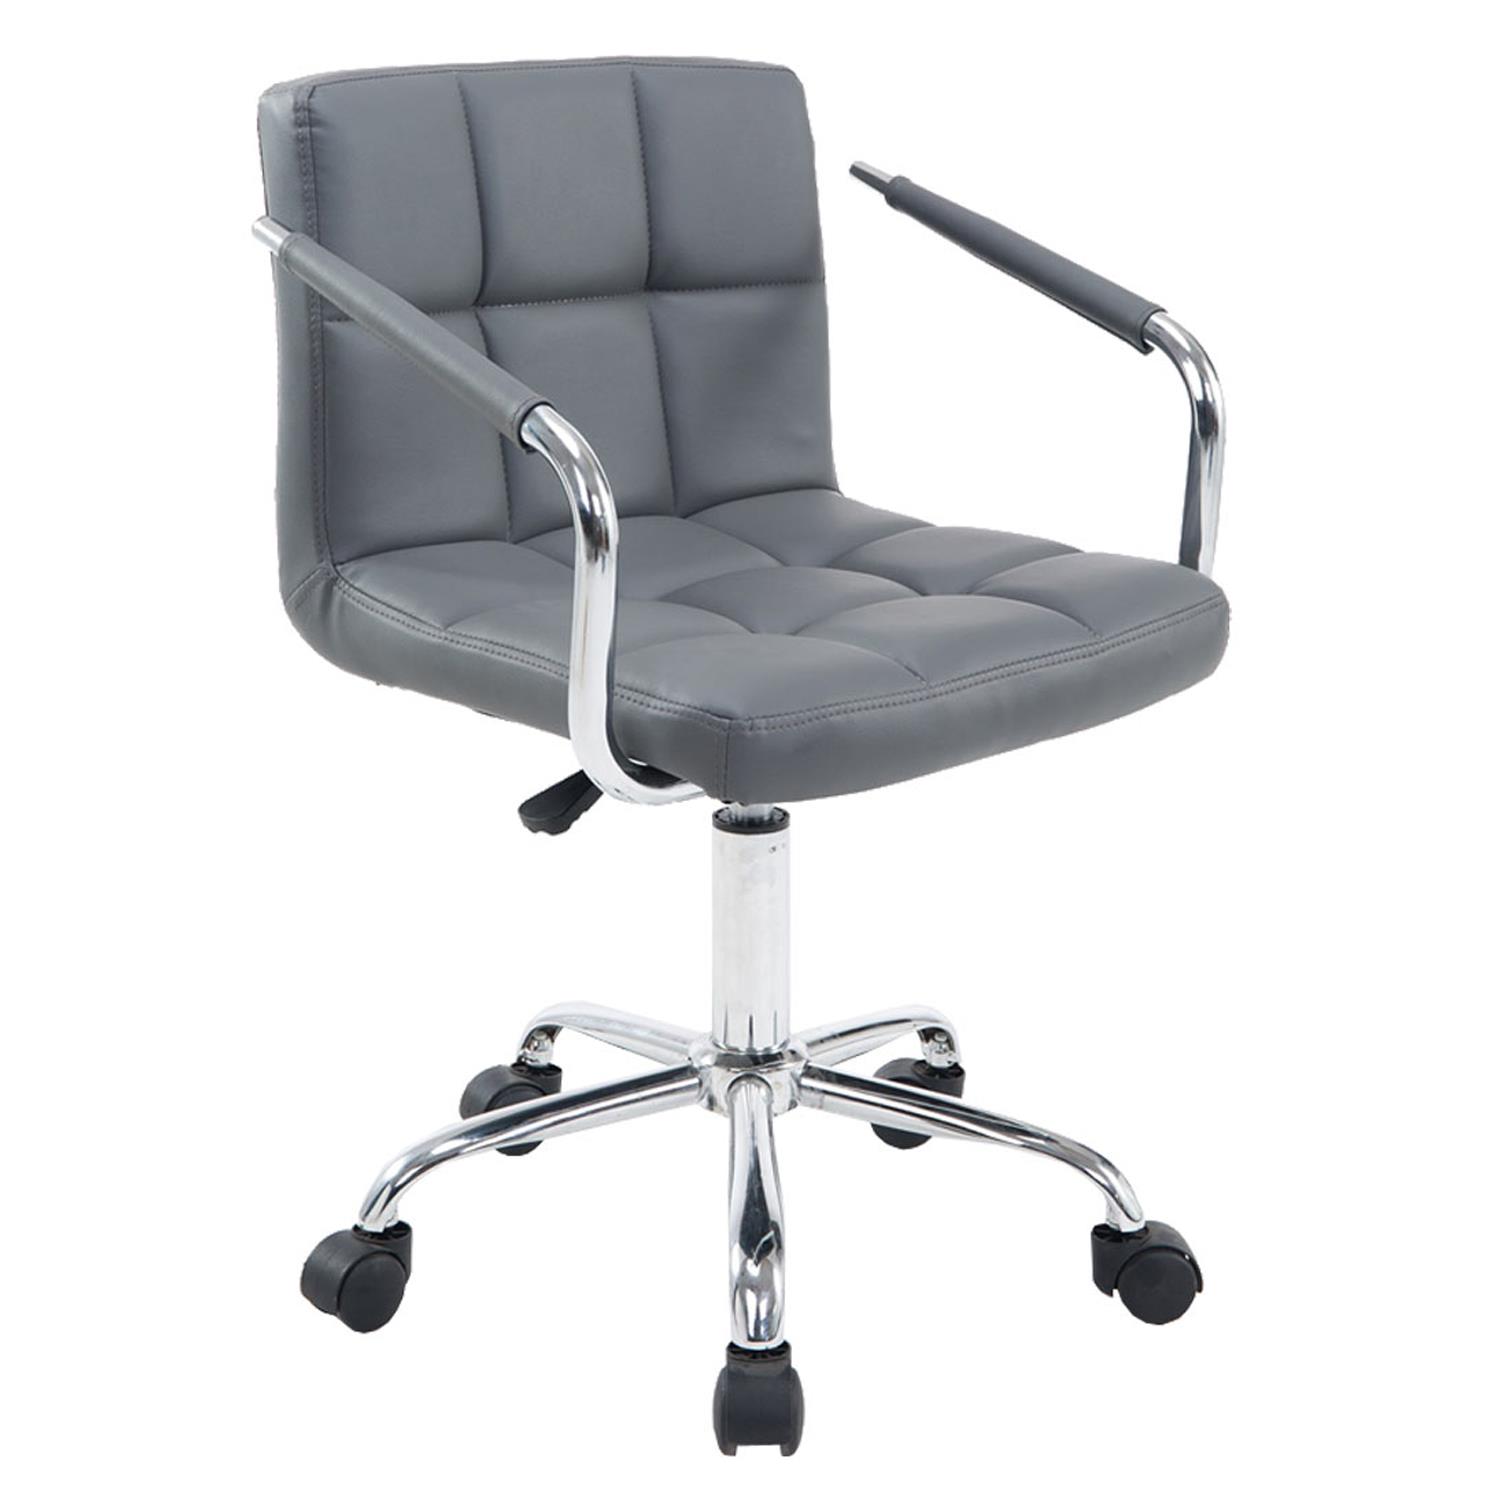 Bürodrehstuhl BETTY, dicke Polsterung, Metallgestell, Lederbezug, Farbe Grau